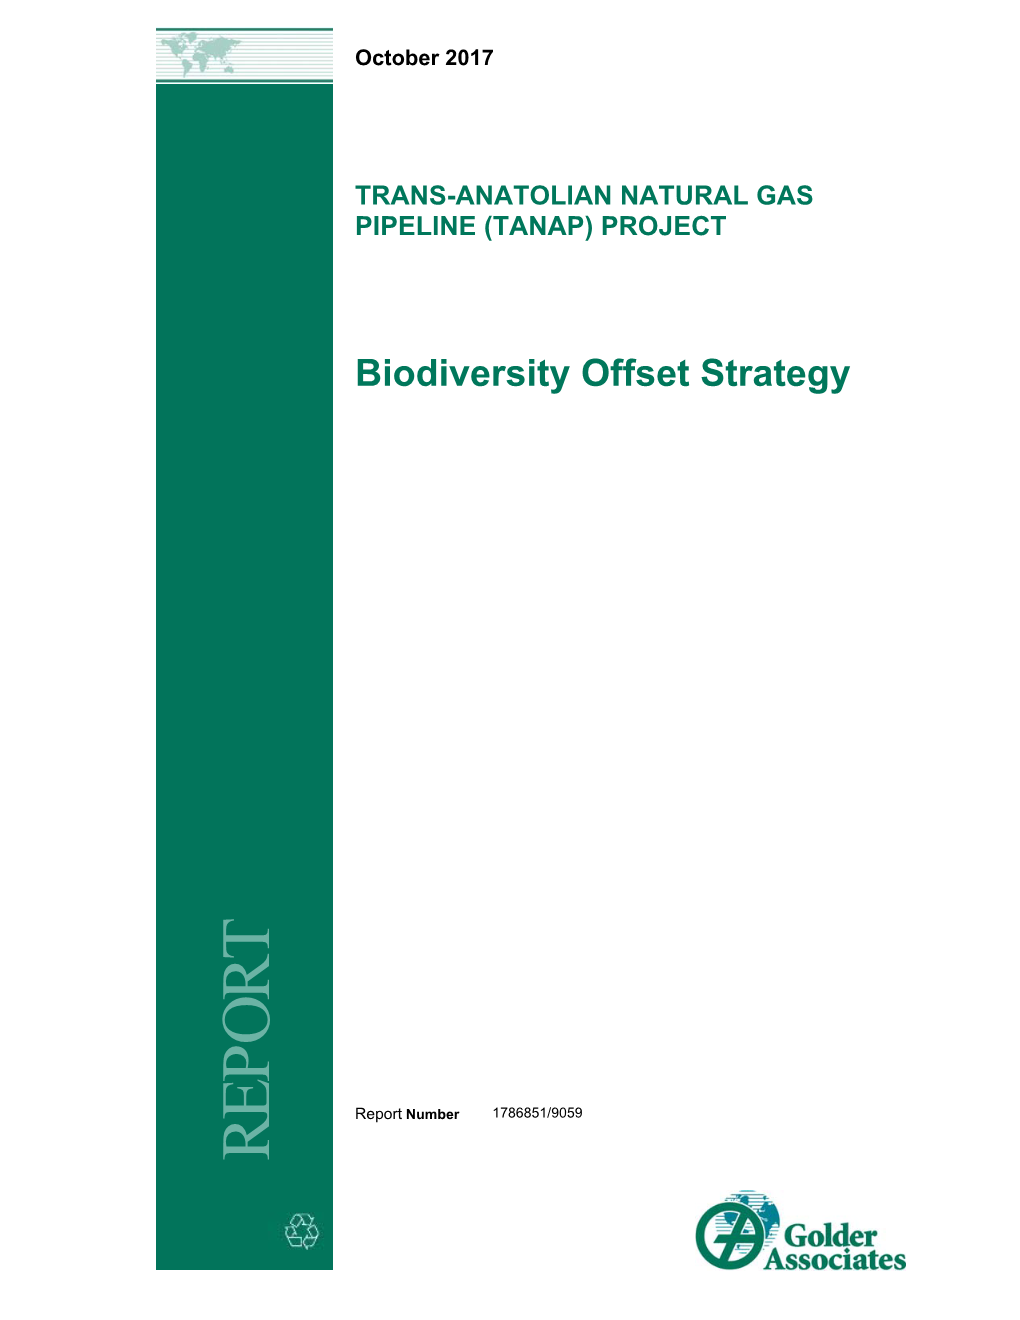 TANAP Project Biodiversity Offset Strategy